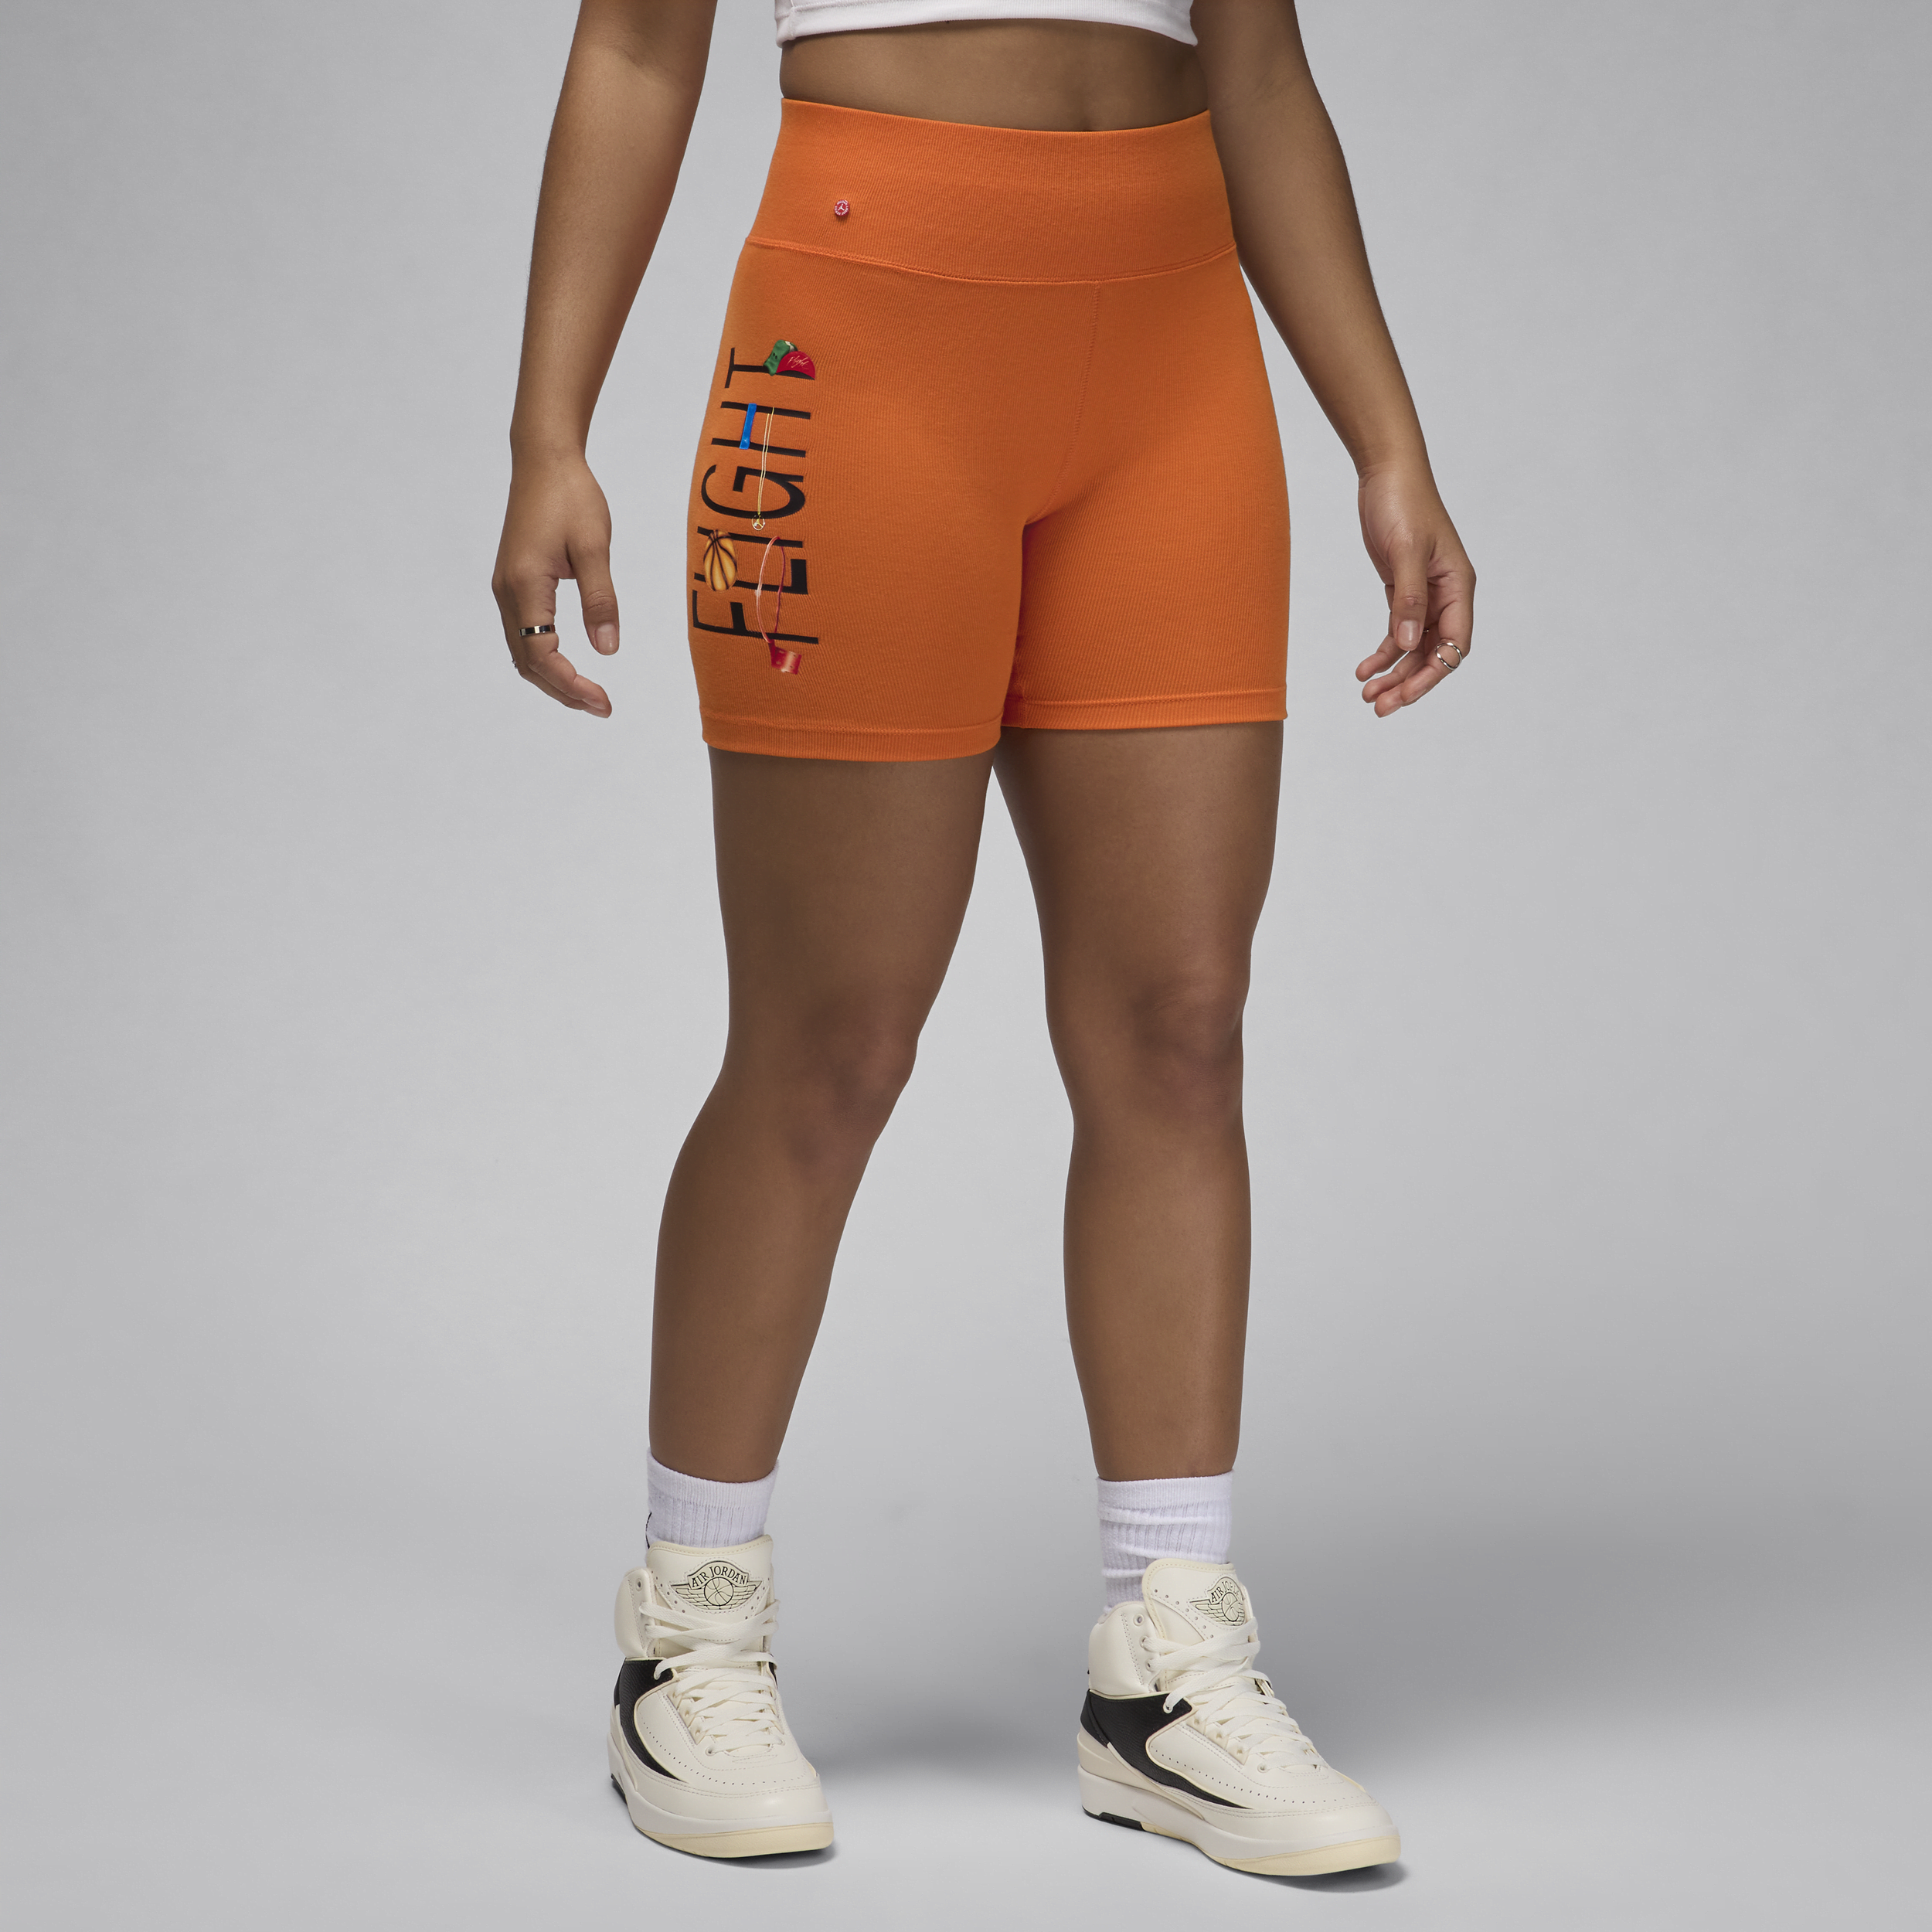 Nike Shorts Jordan Artist Series by Darien Birks – Donna - Arancione